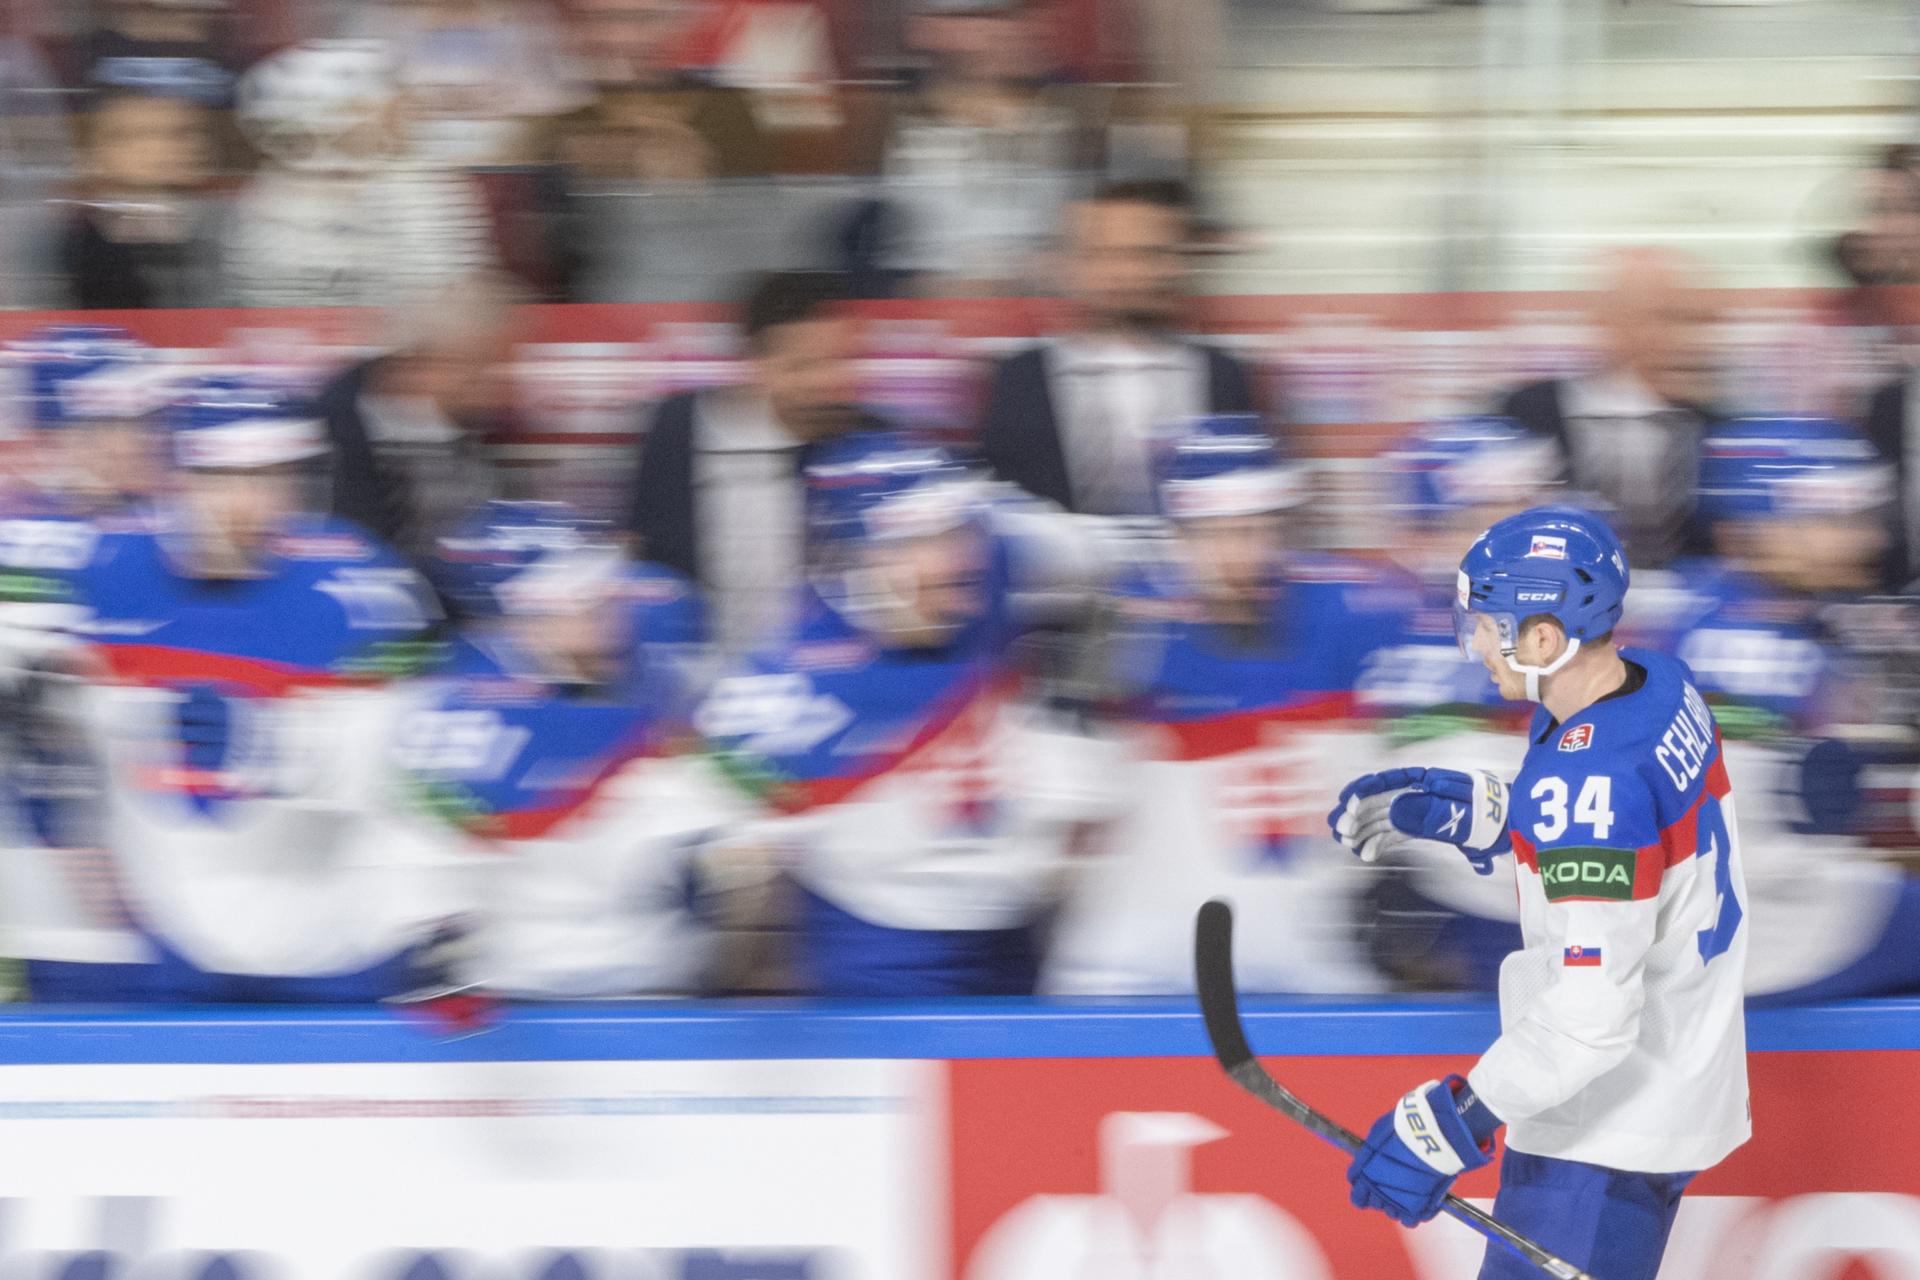 MS v hokeji: Zápas Slovensko - Nórsko sledujeme online